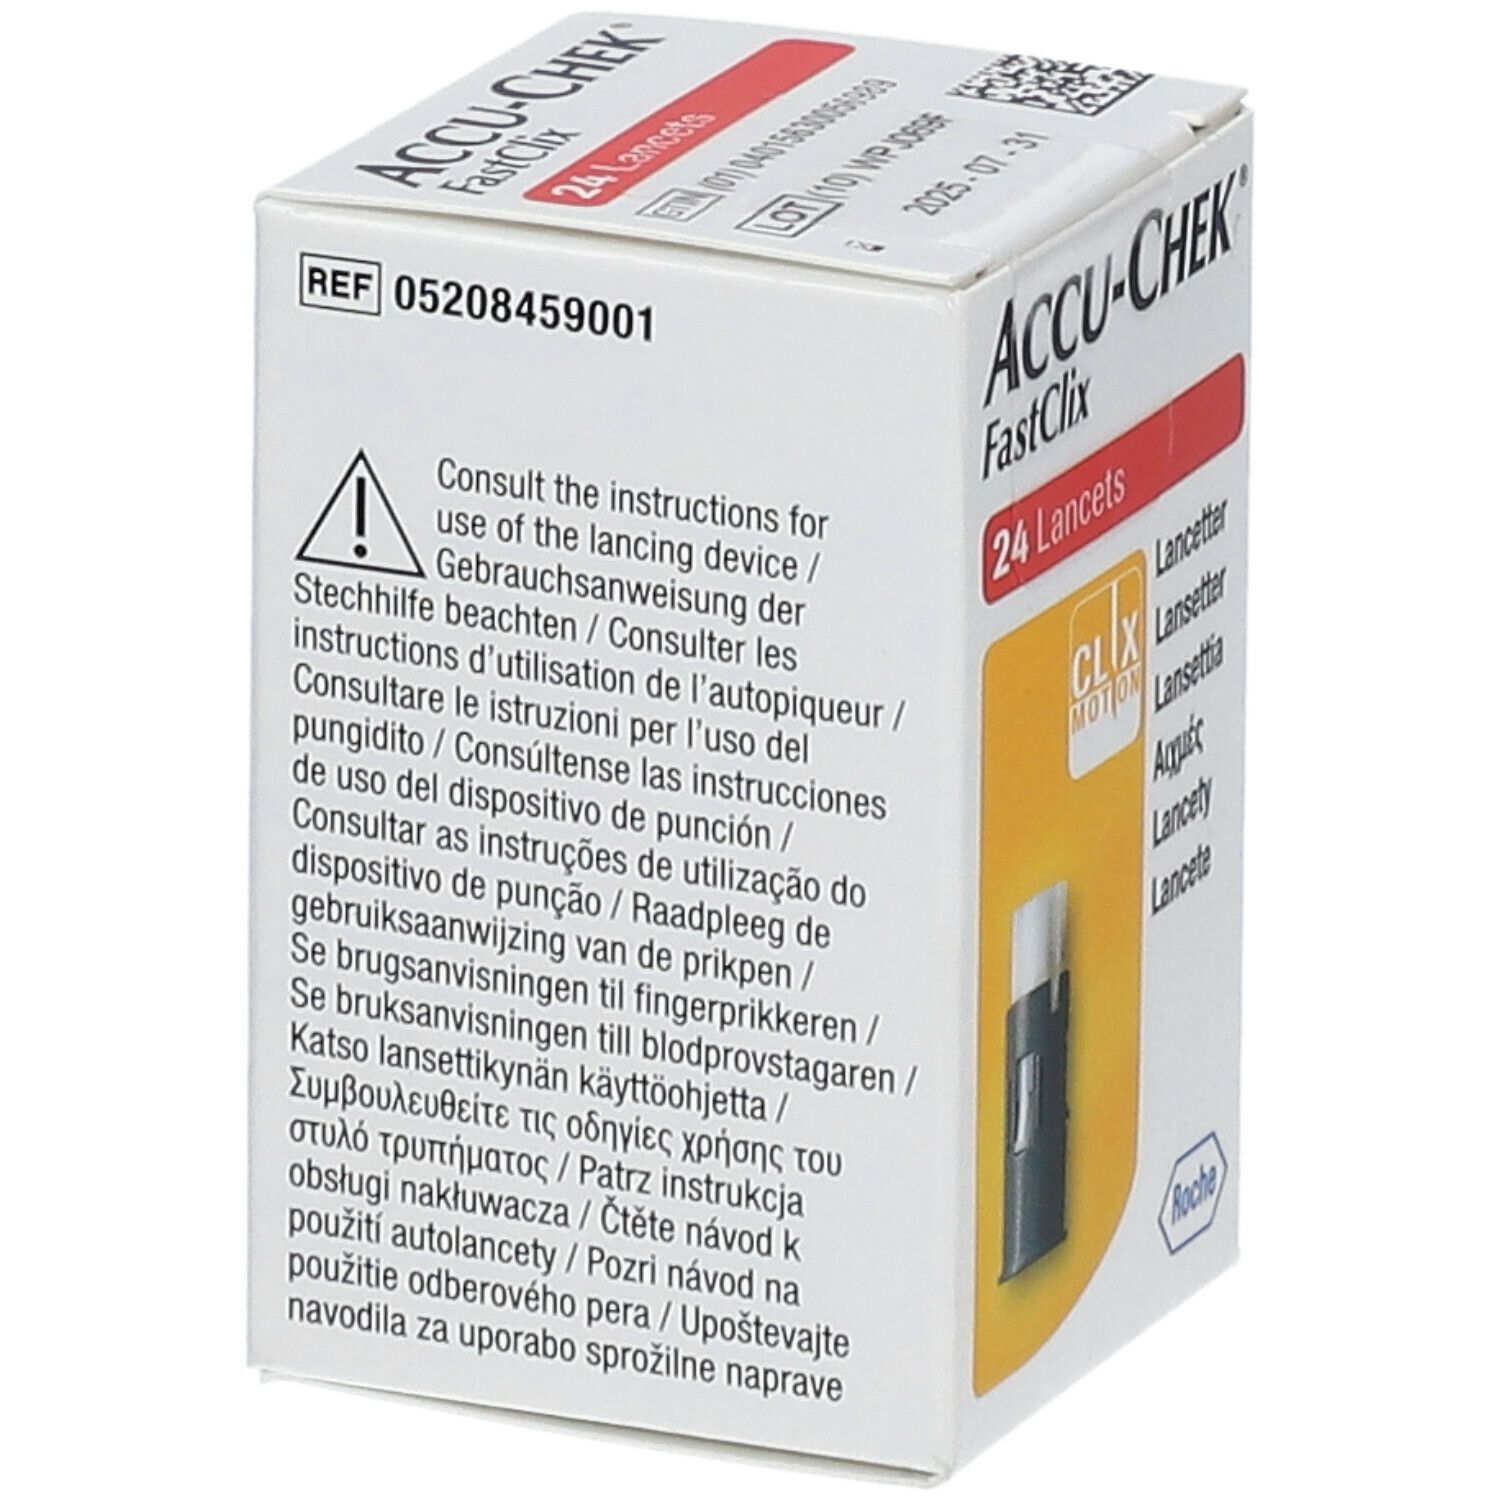 ACCU-CHEK® FastClix Lancette